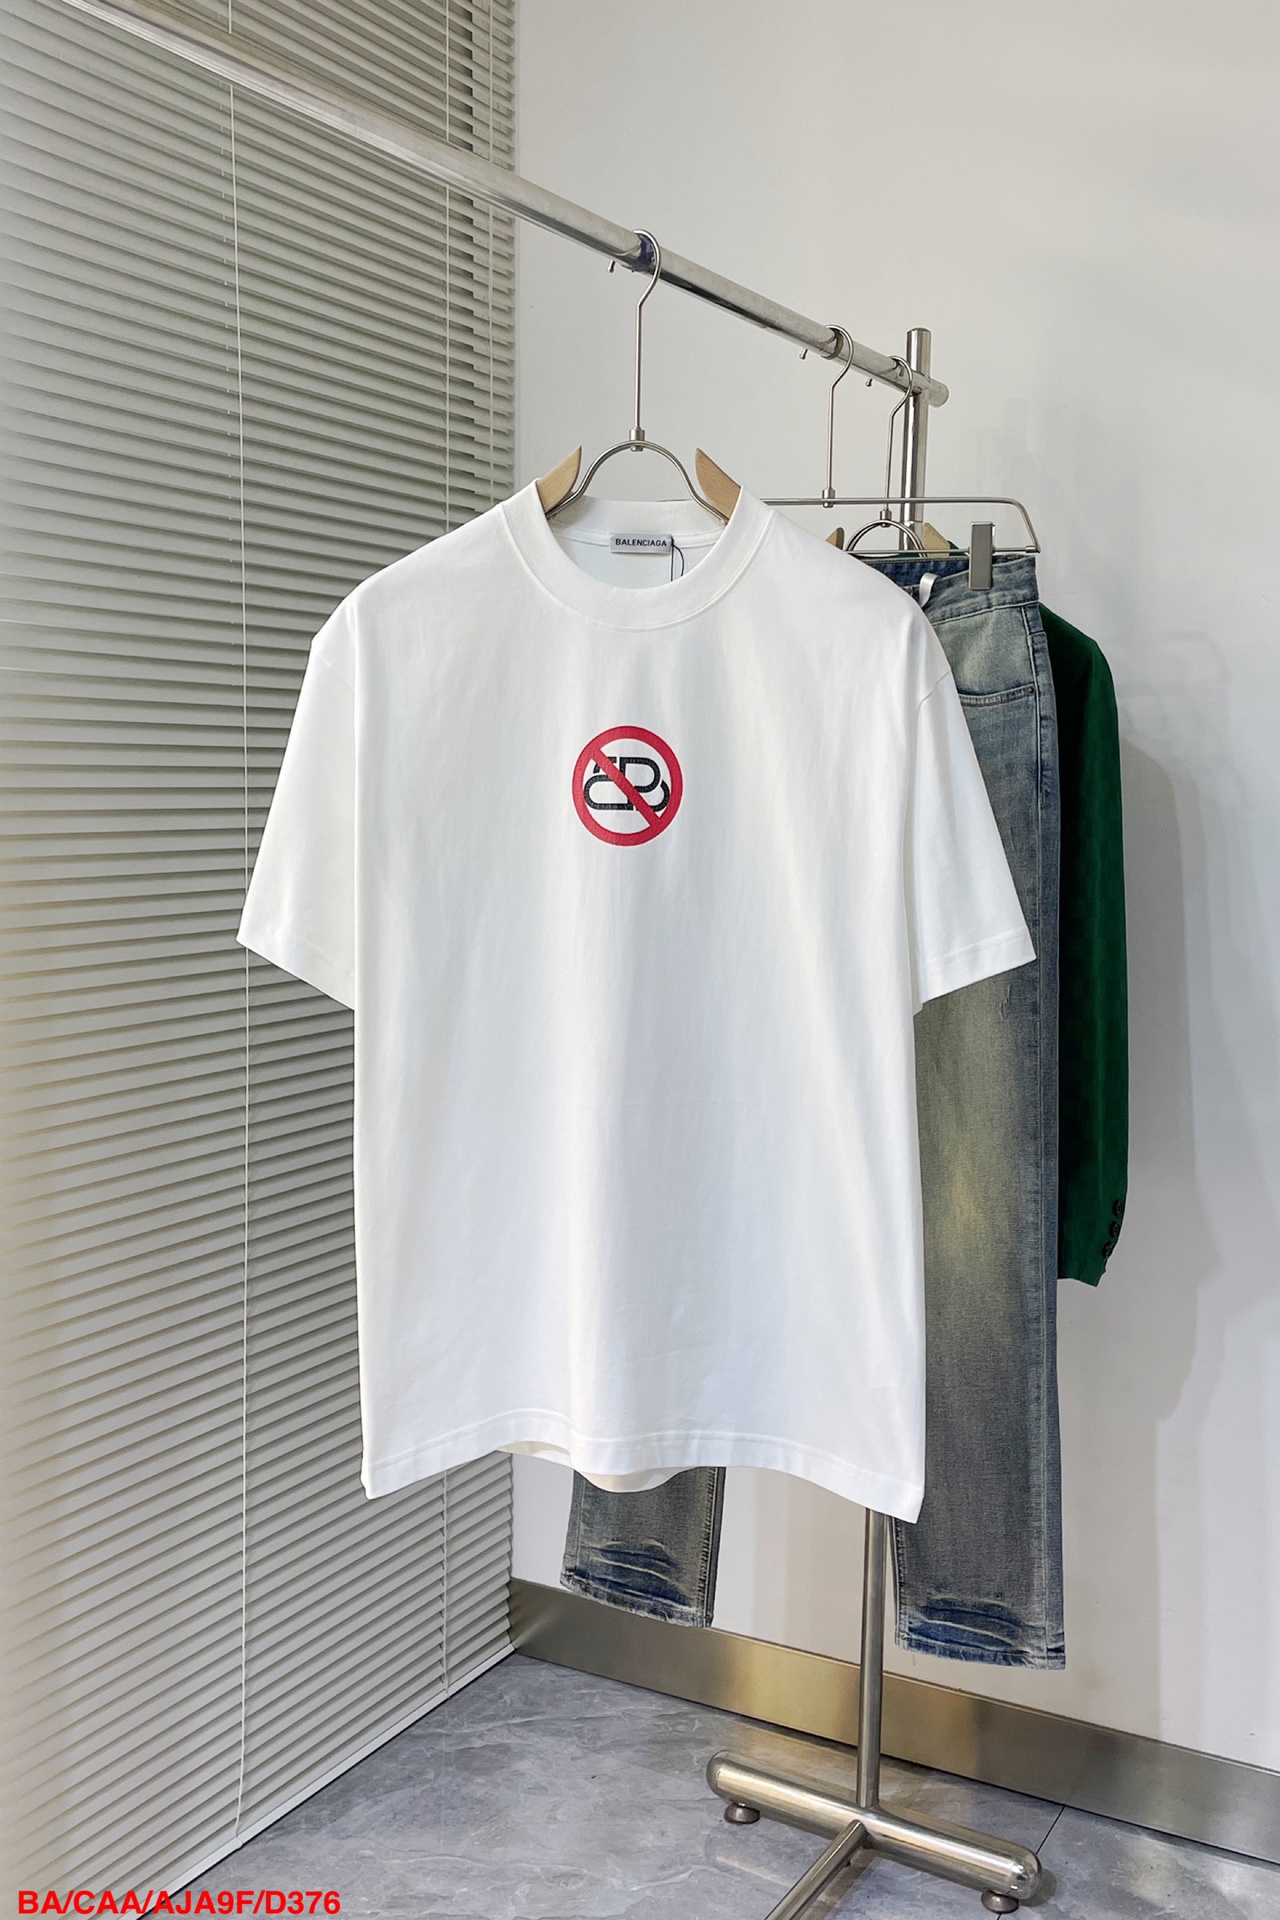 Balenciaga Clothing T-Shirt Printing Men Cotton Knitting Short Sleeve